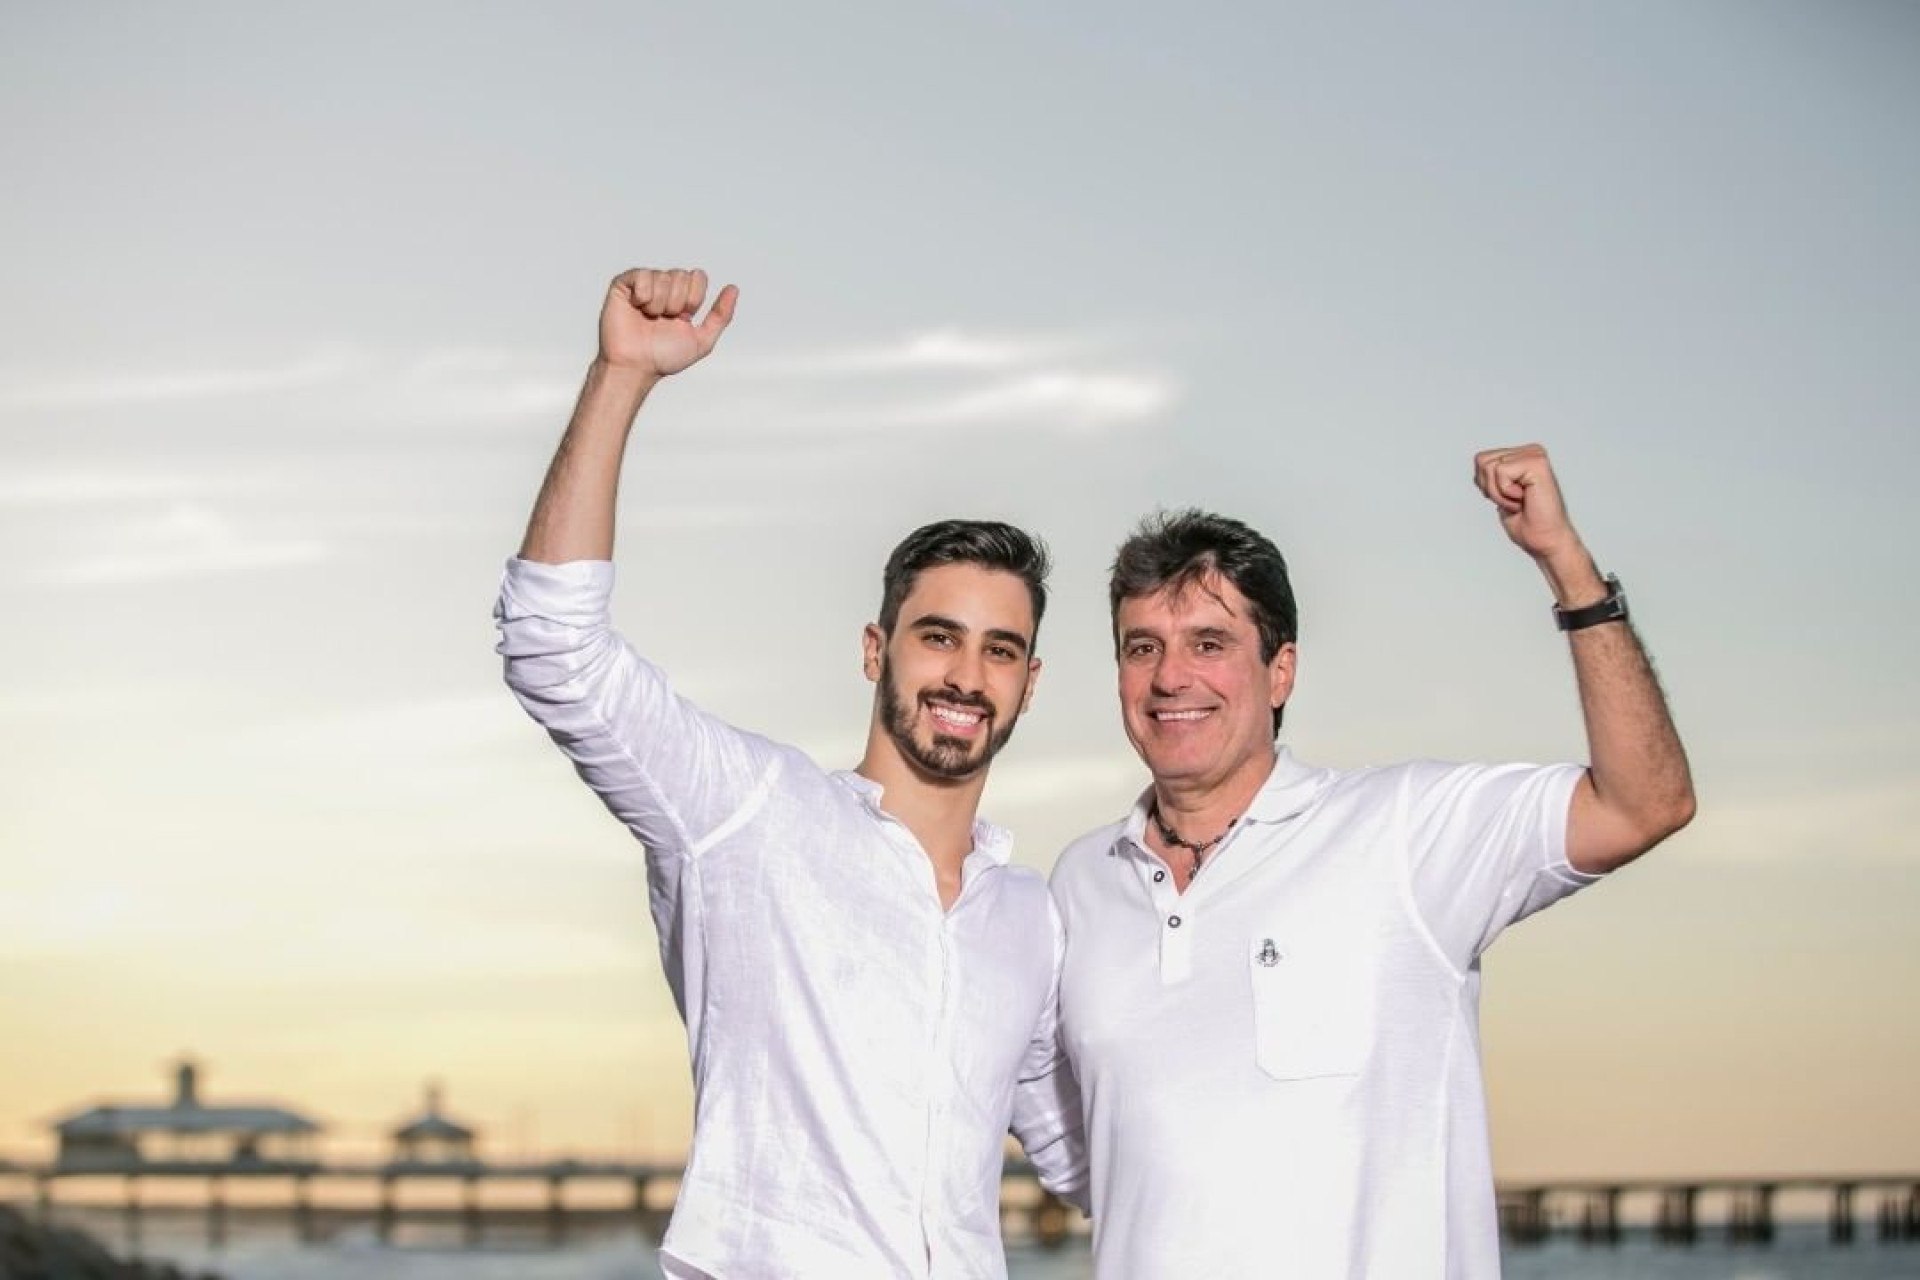 Ilo Neto e seu pai, o deputado estadual Agenor Neto (MDB) (Foto: Reprodução/Instagram iloneto)